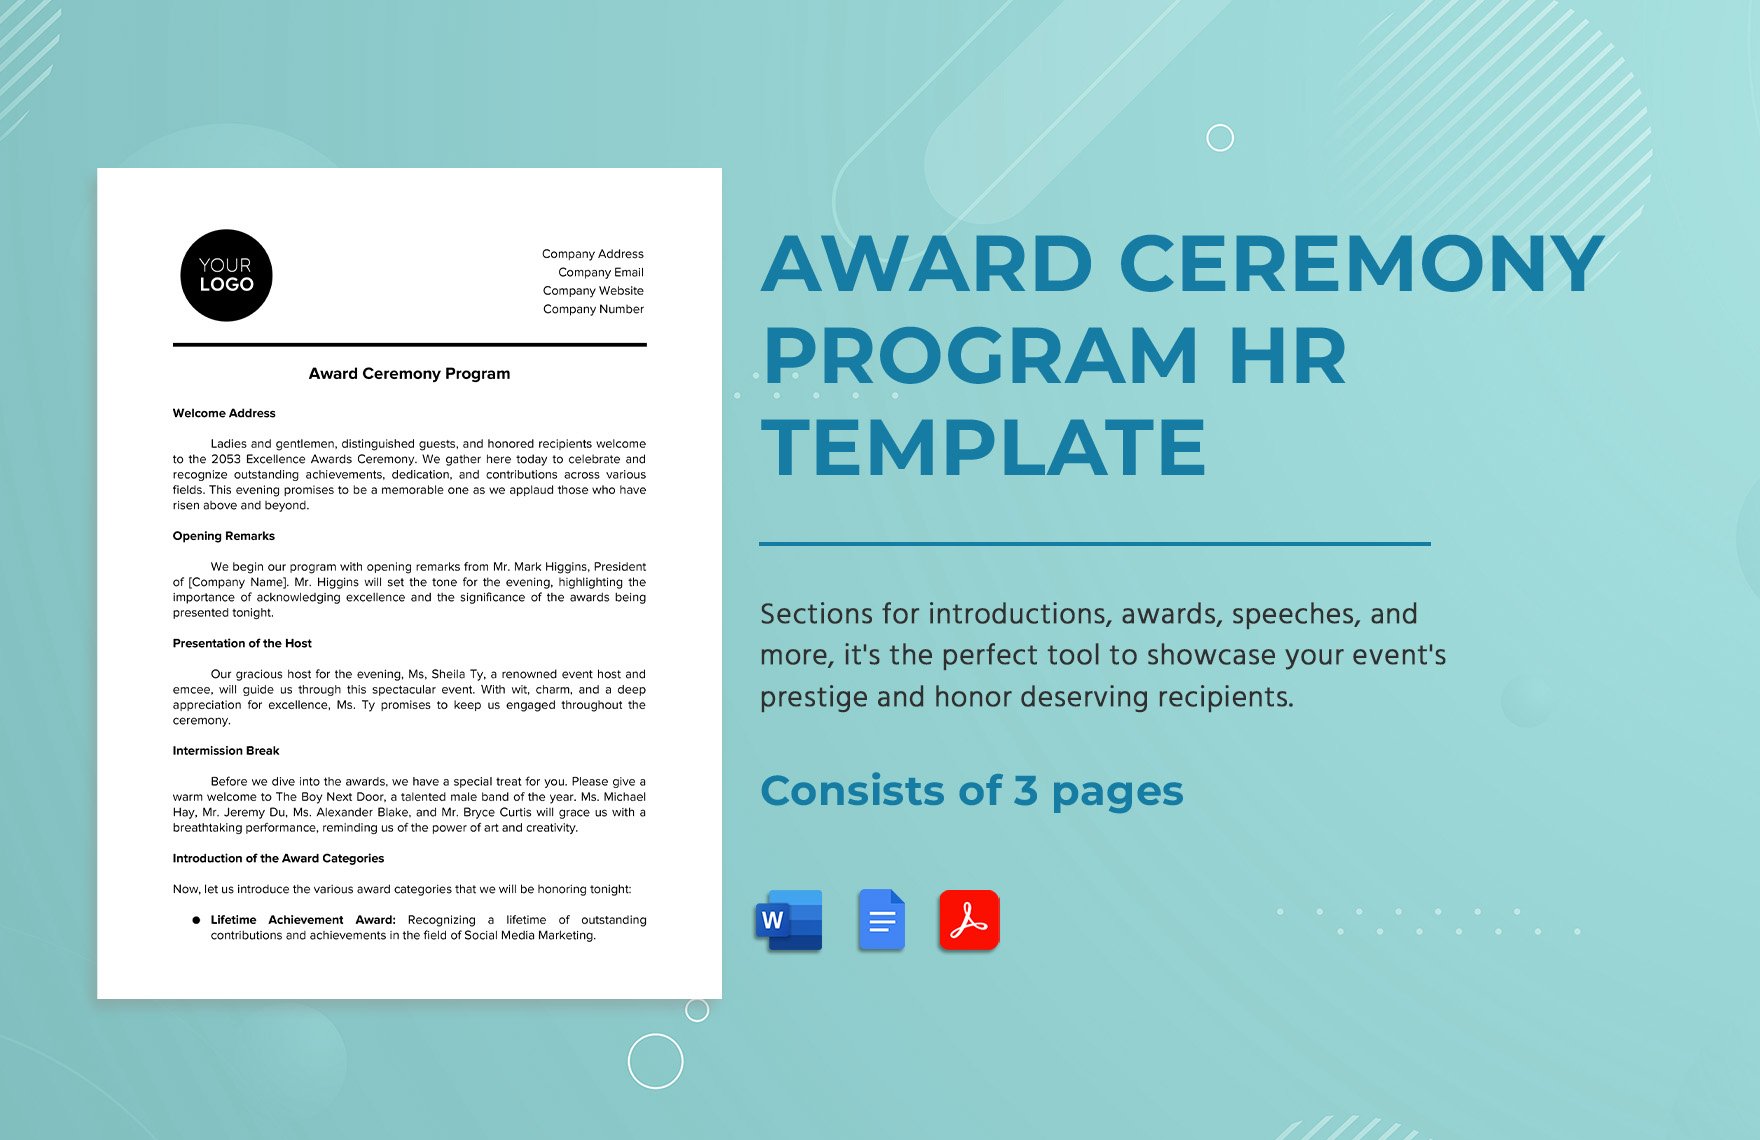 Award Ceremony Program HR Template in Word, Google Docs, PDF